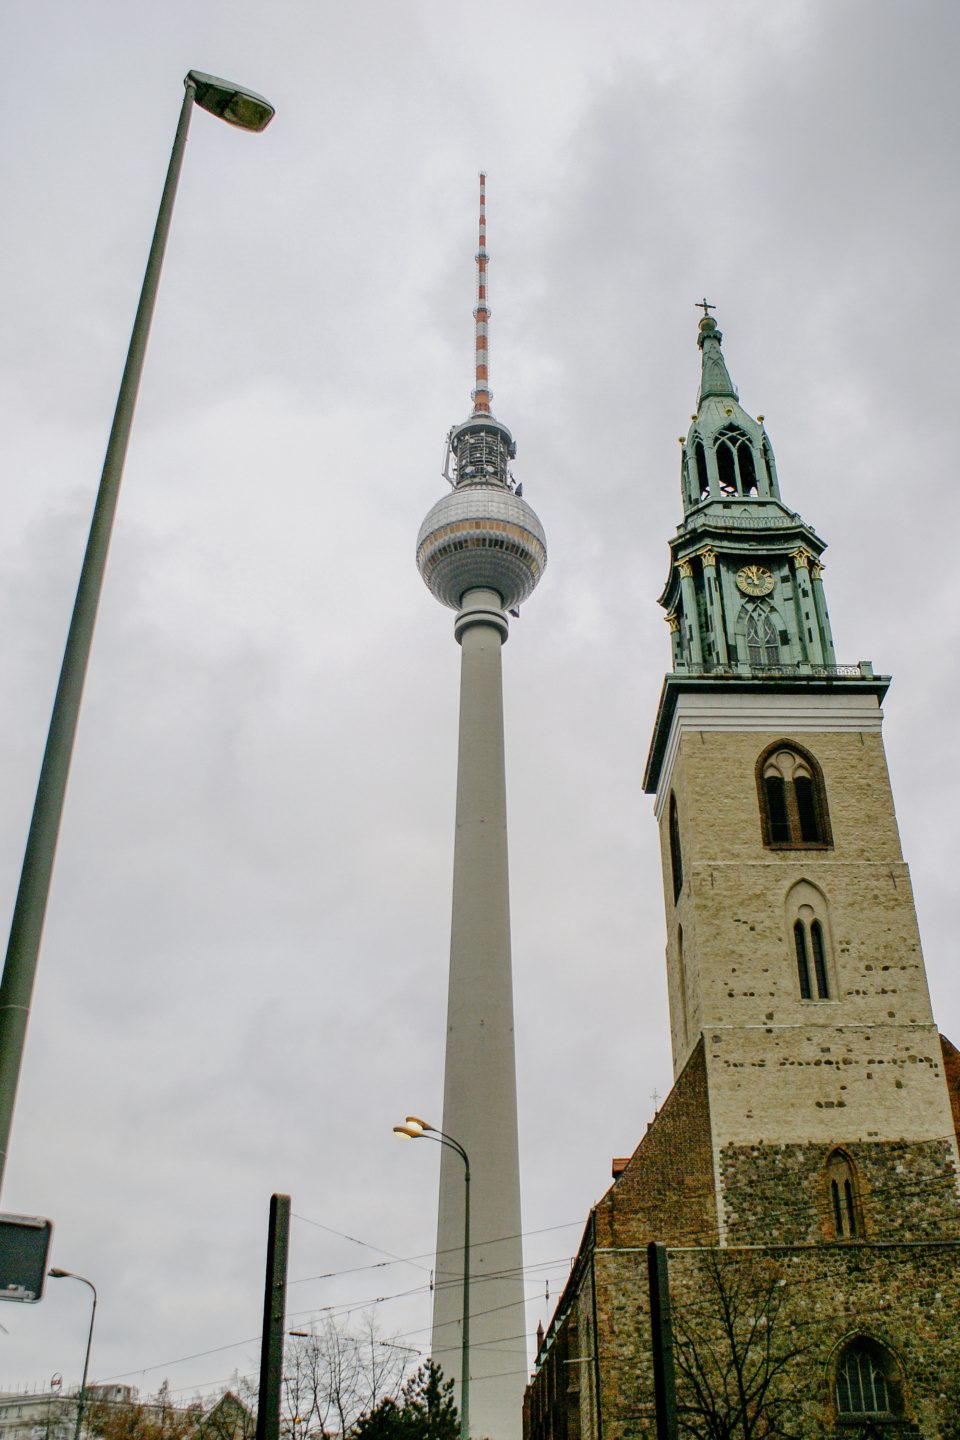 The Berliner Fernsehturm